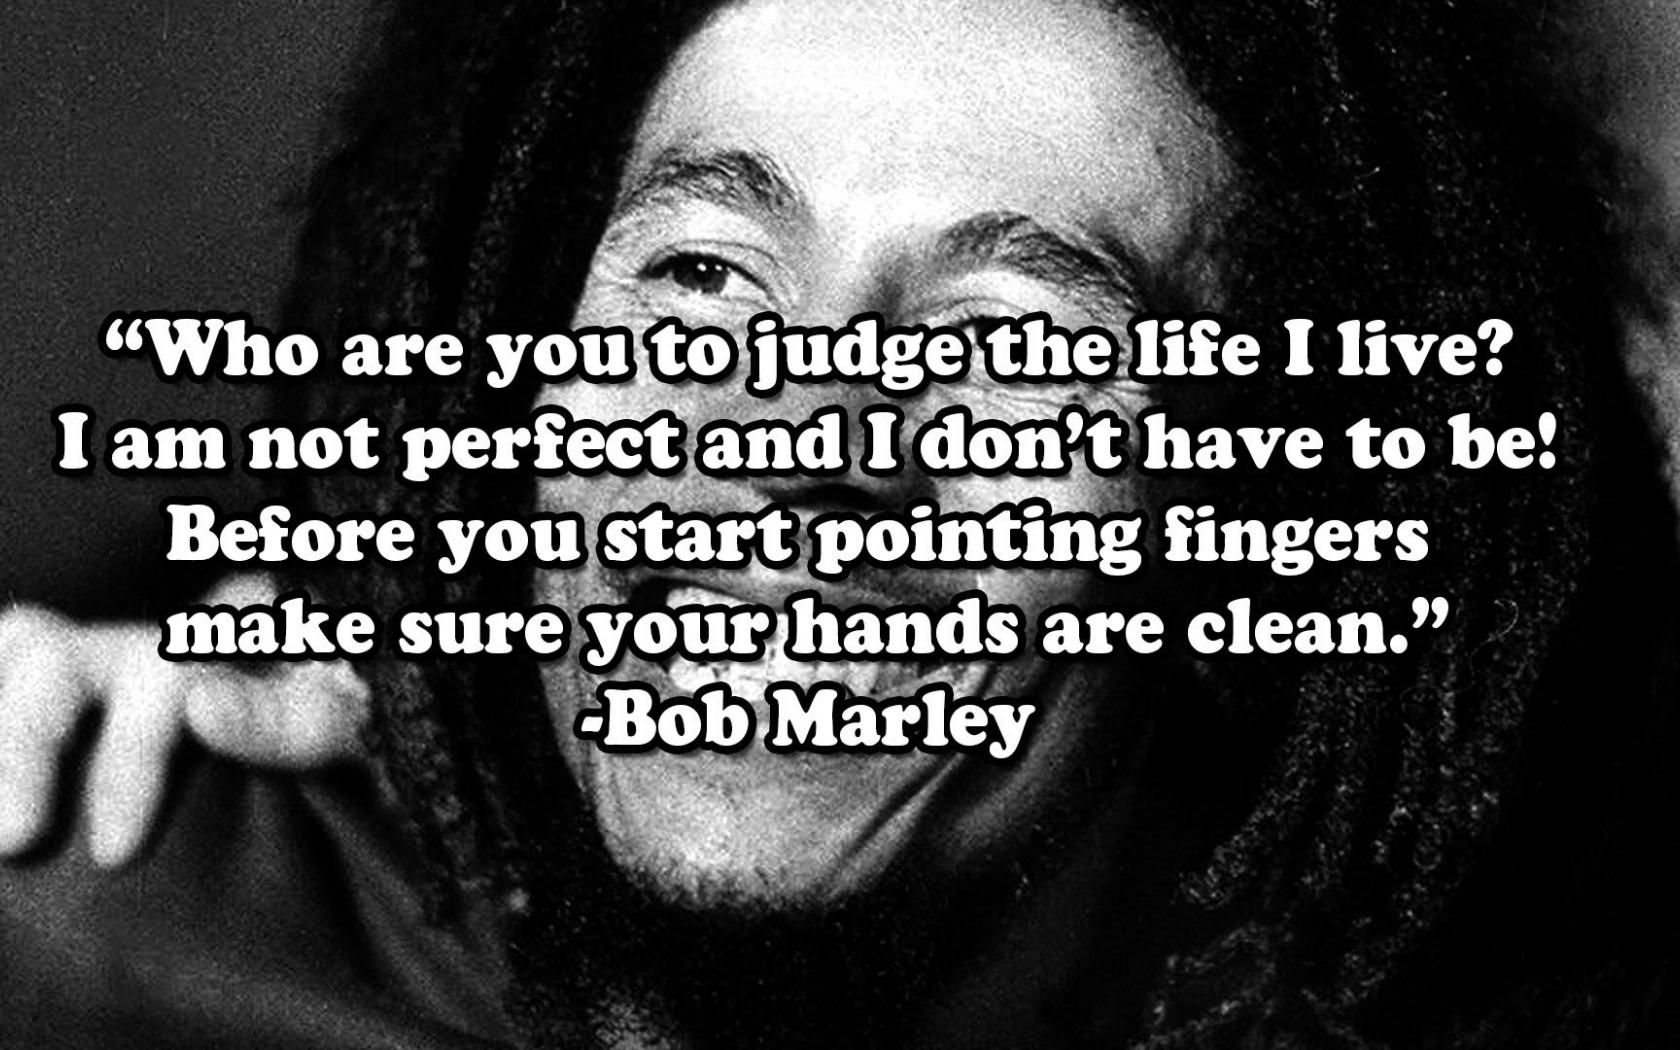 Free download Bob Marley reggae singer marijuana 420 quote